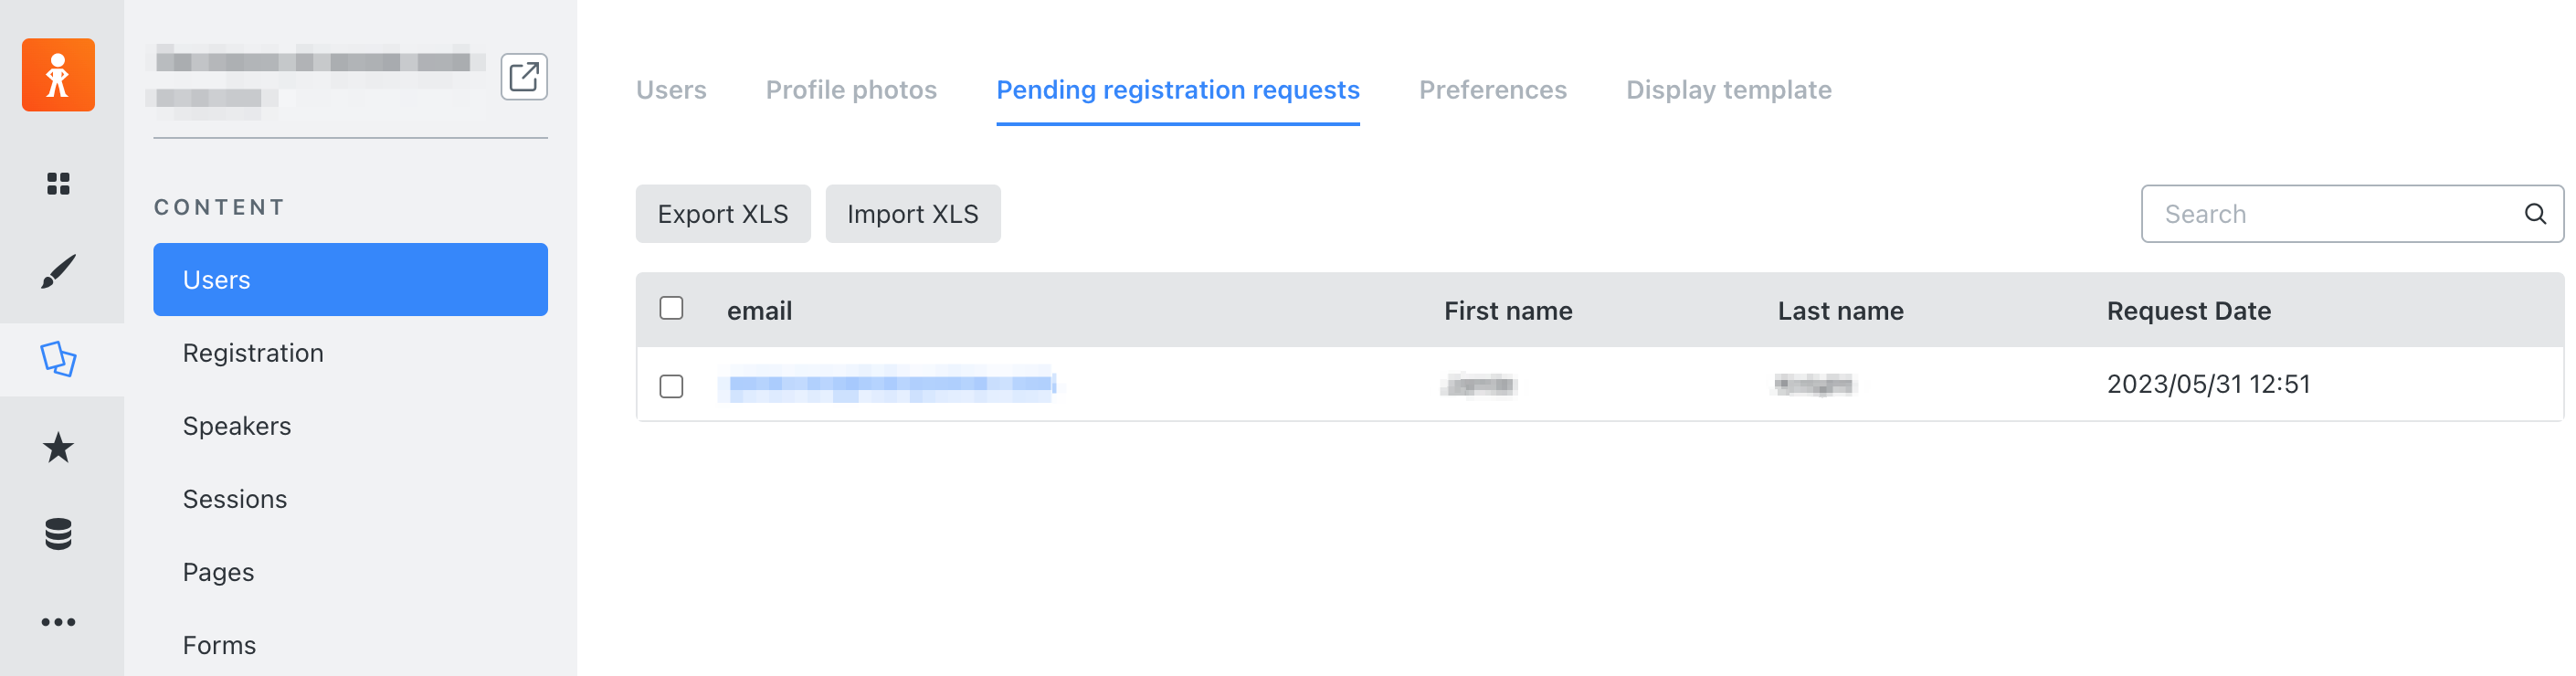 Pending_registration_requests_final.png